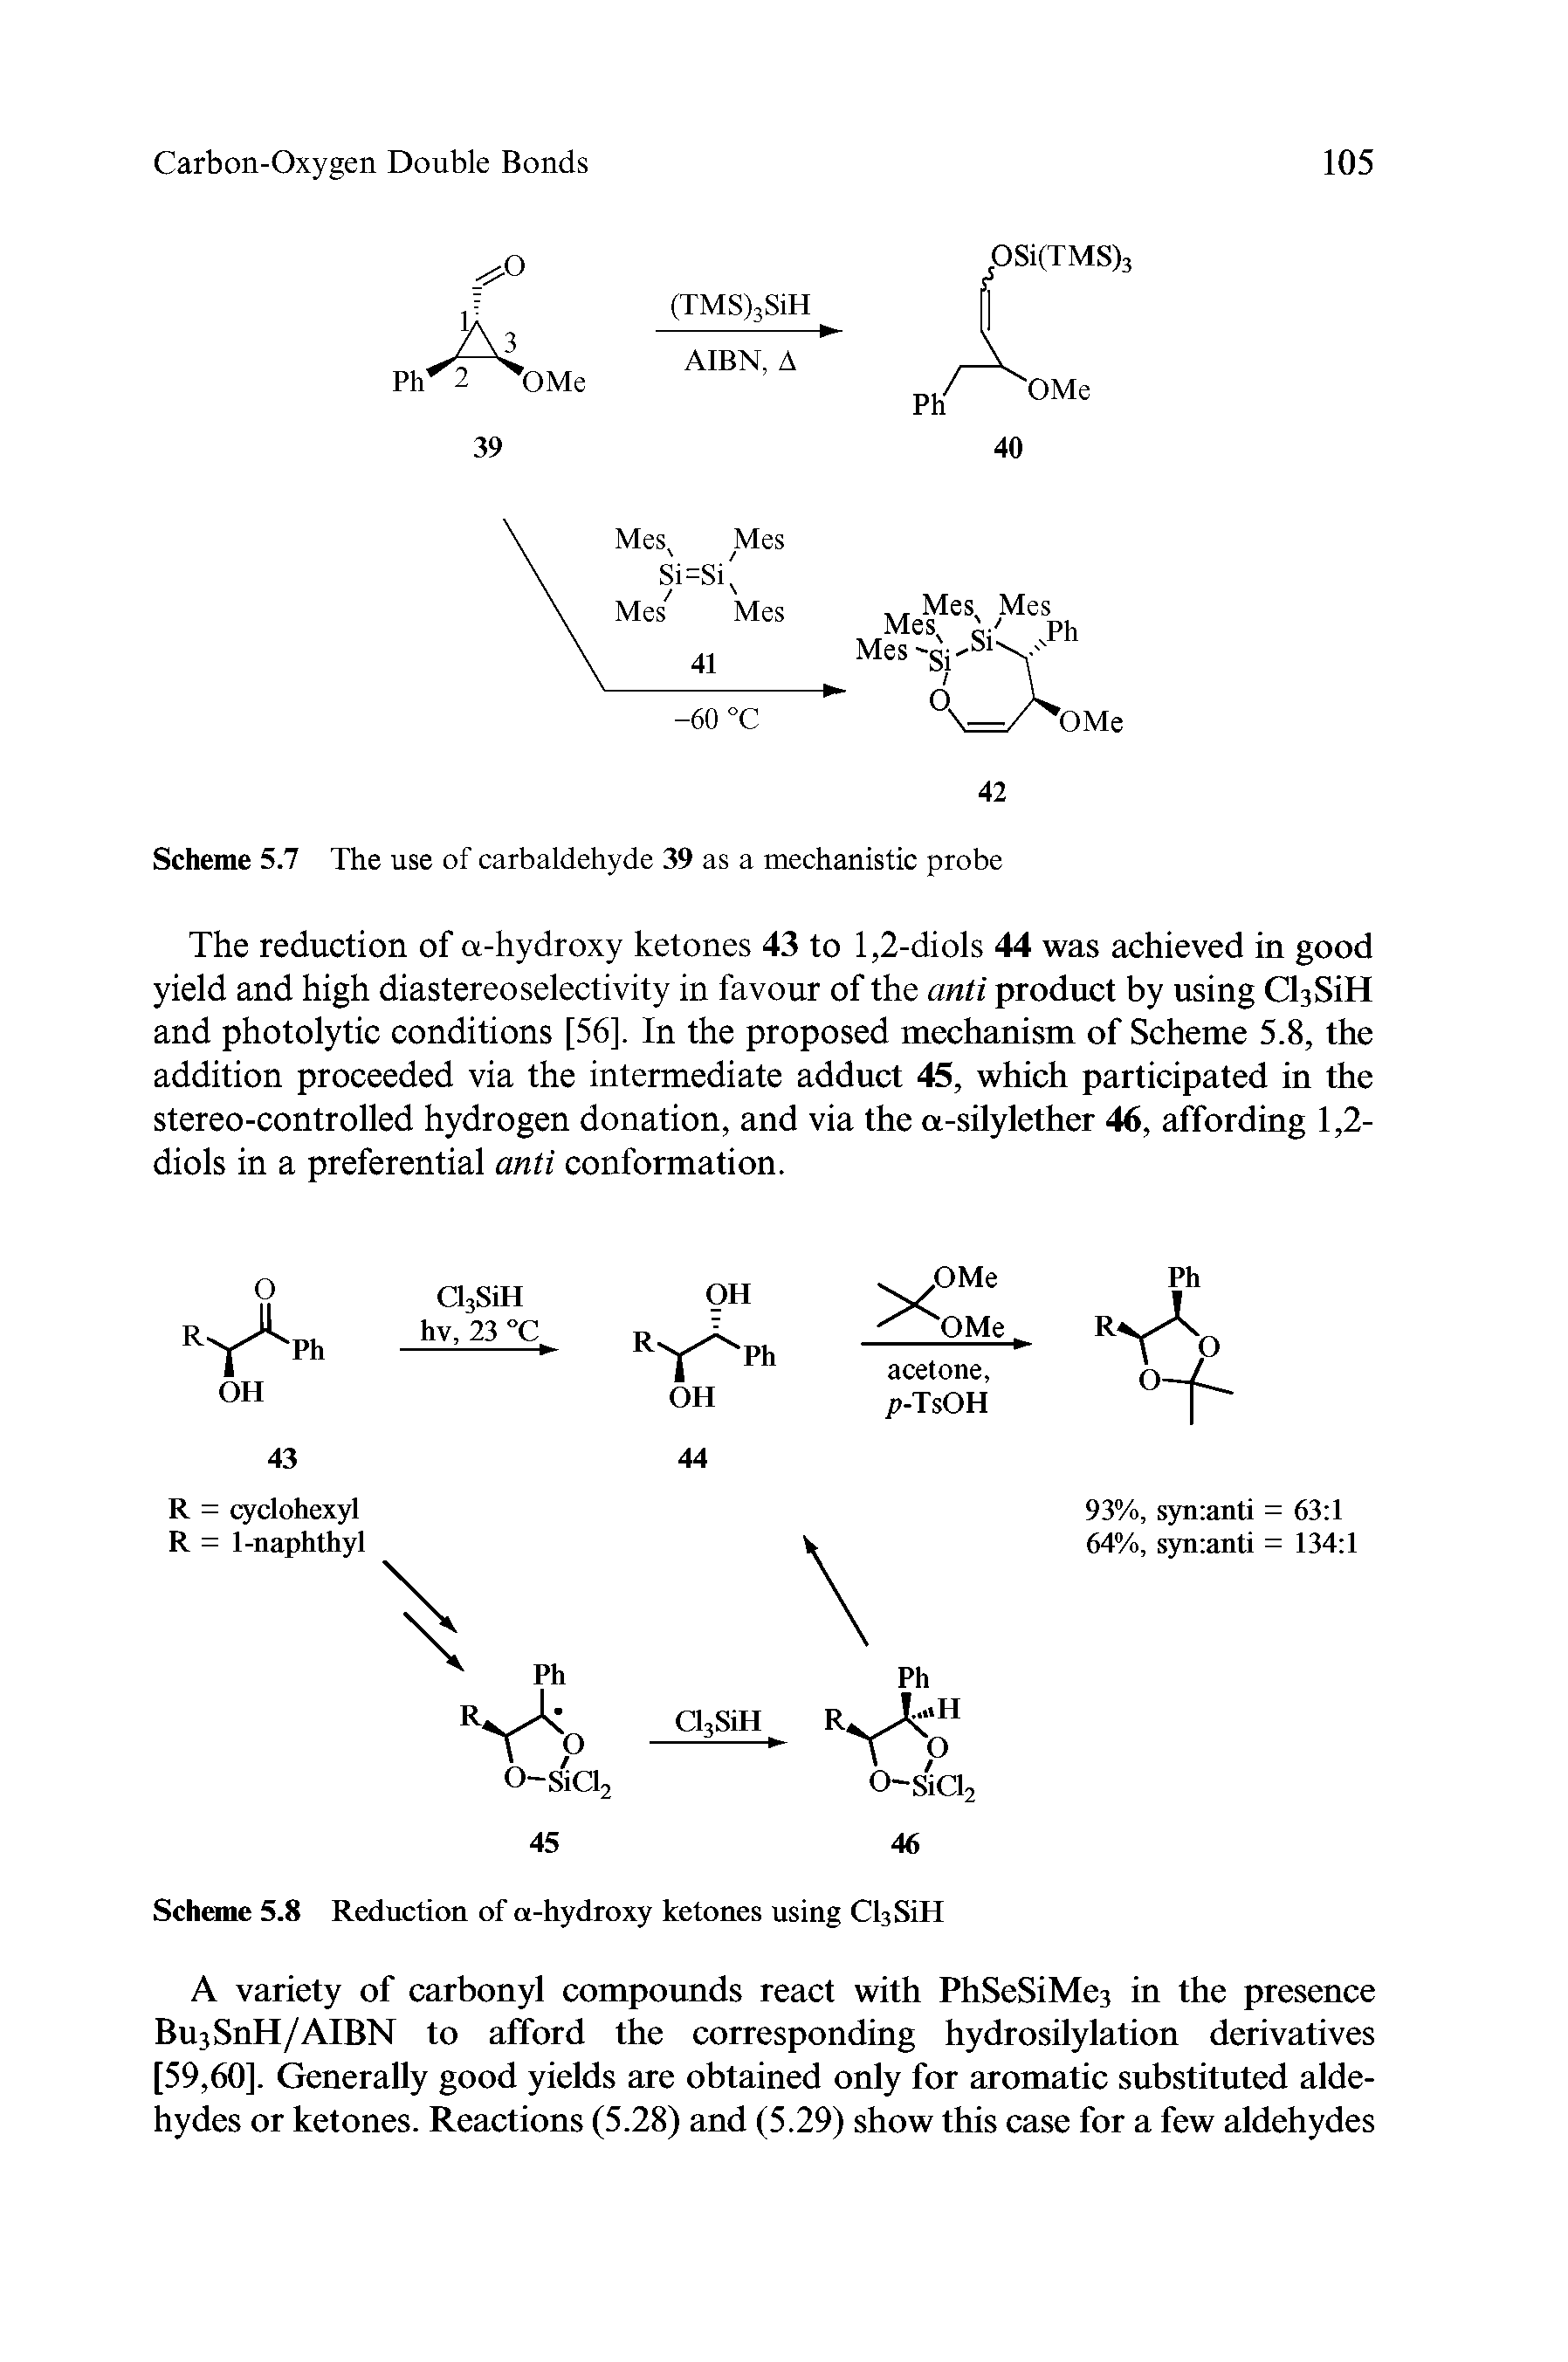 Scheme 5.8 Reduction of a-hydroxy ketones using CbSiH...